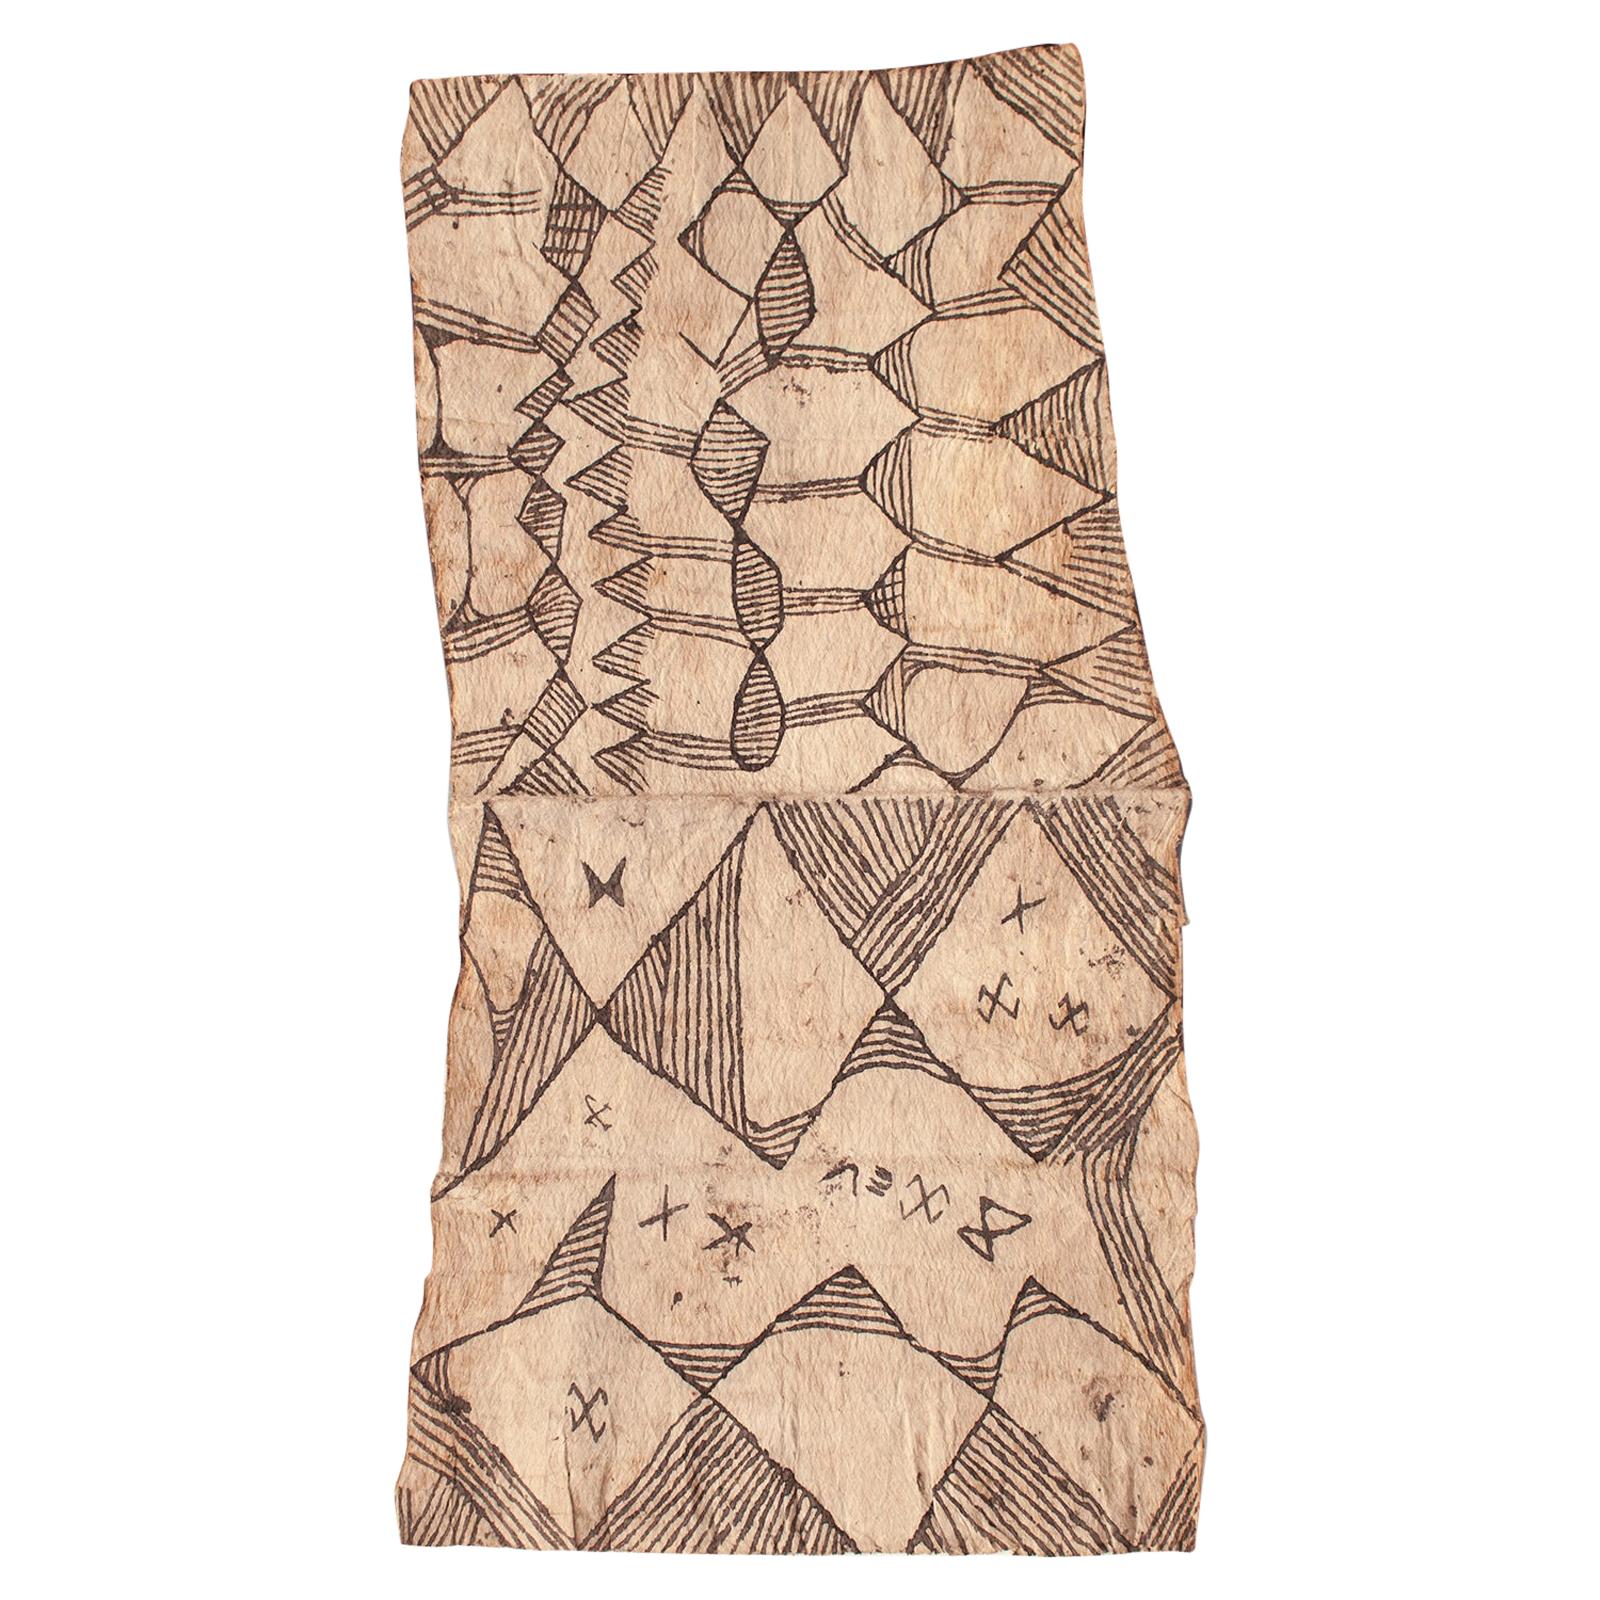 20th Century Bark Cloth Painting, Mbuti 'Efe' People, D.R. Congo